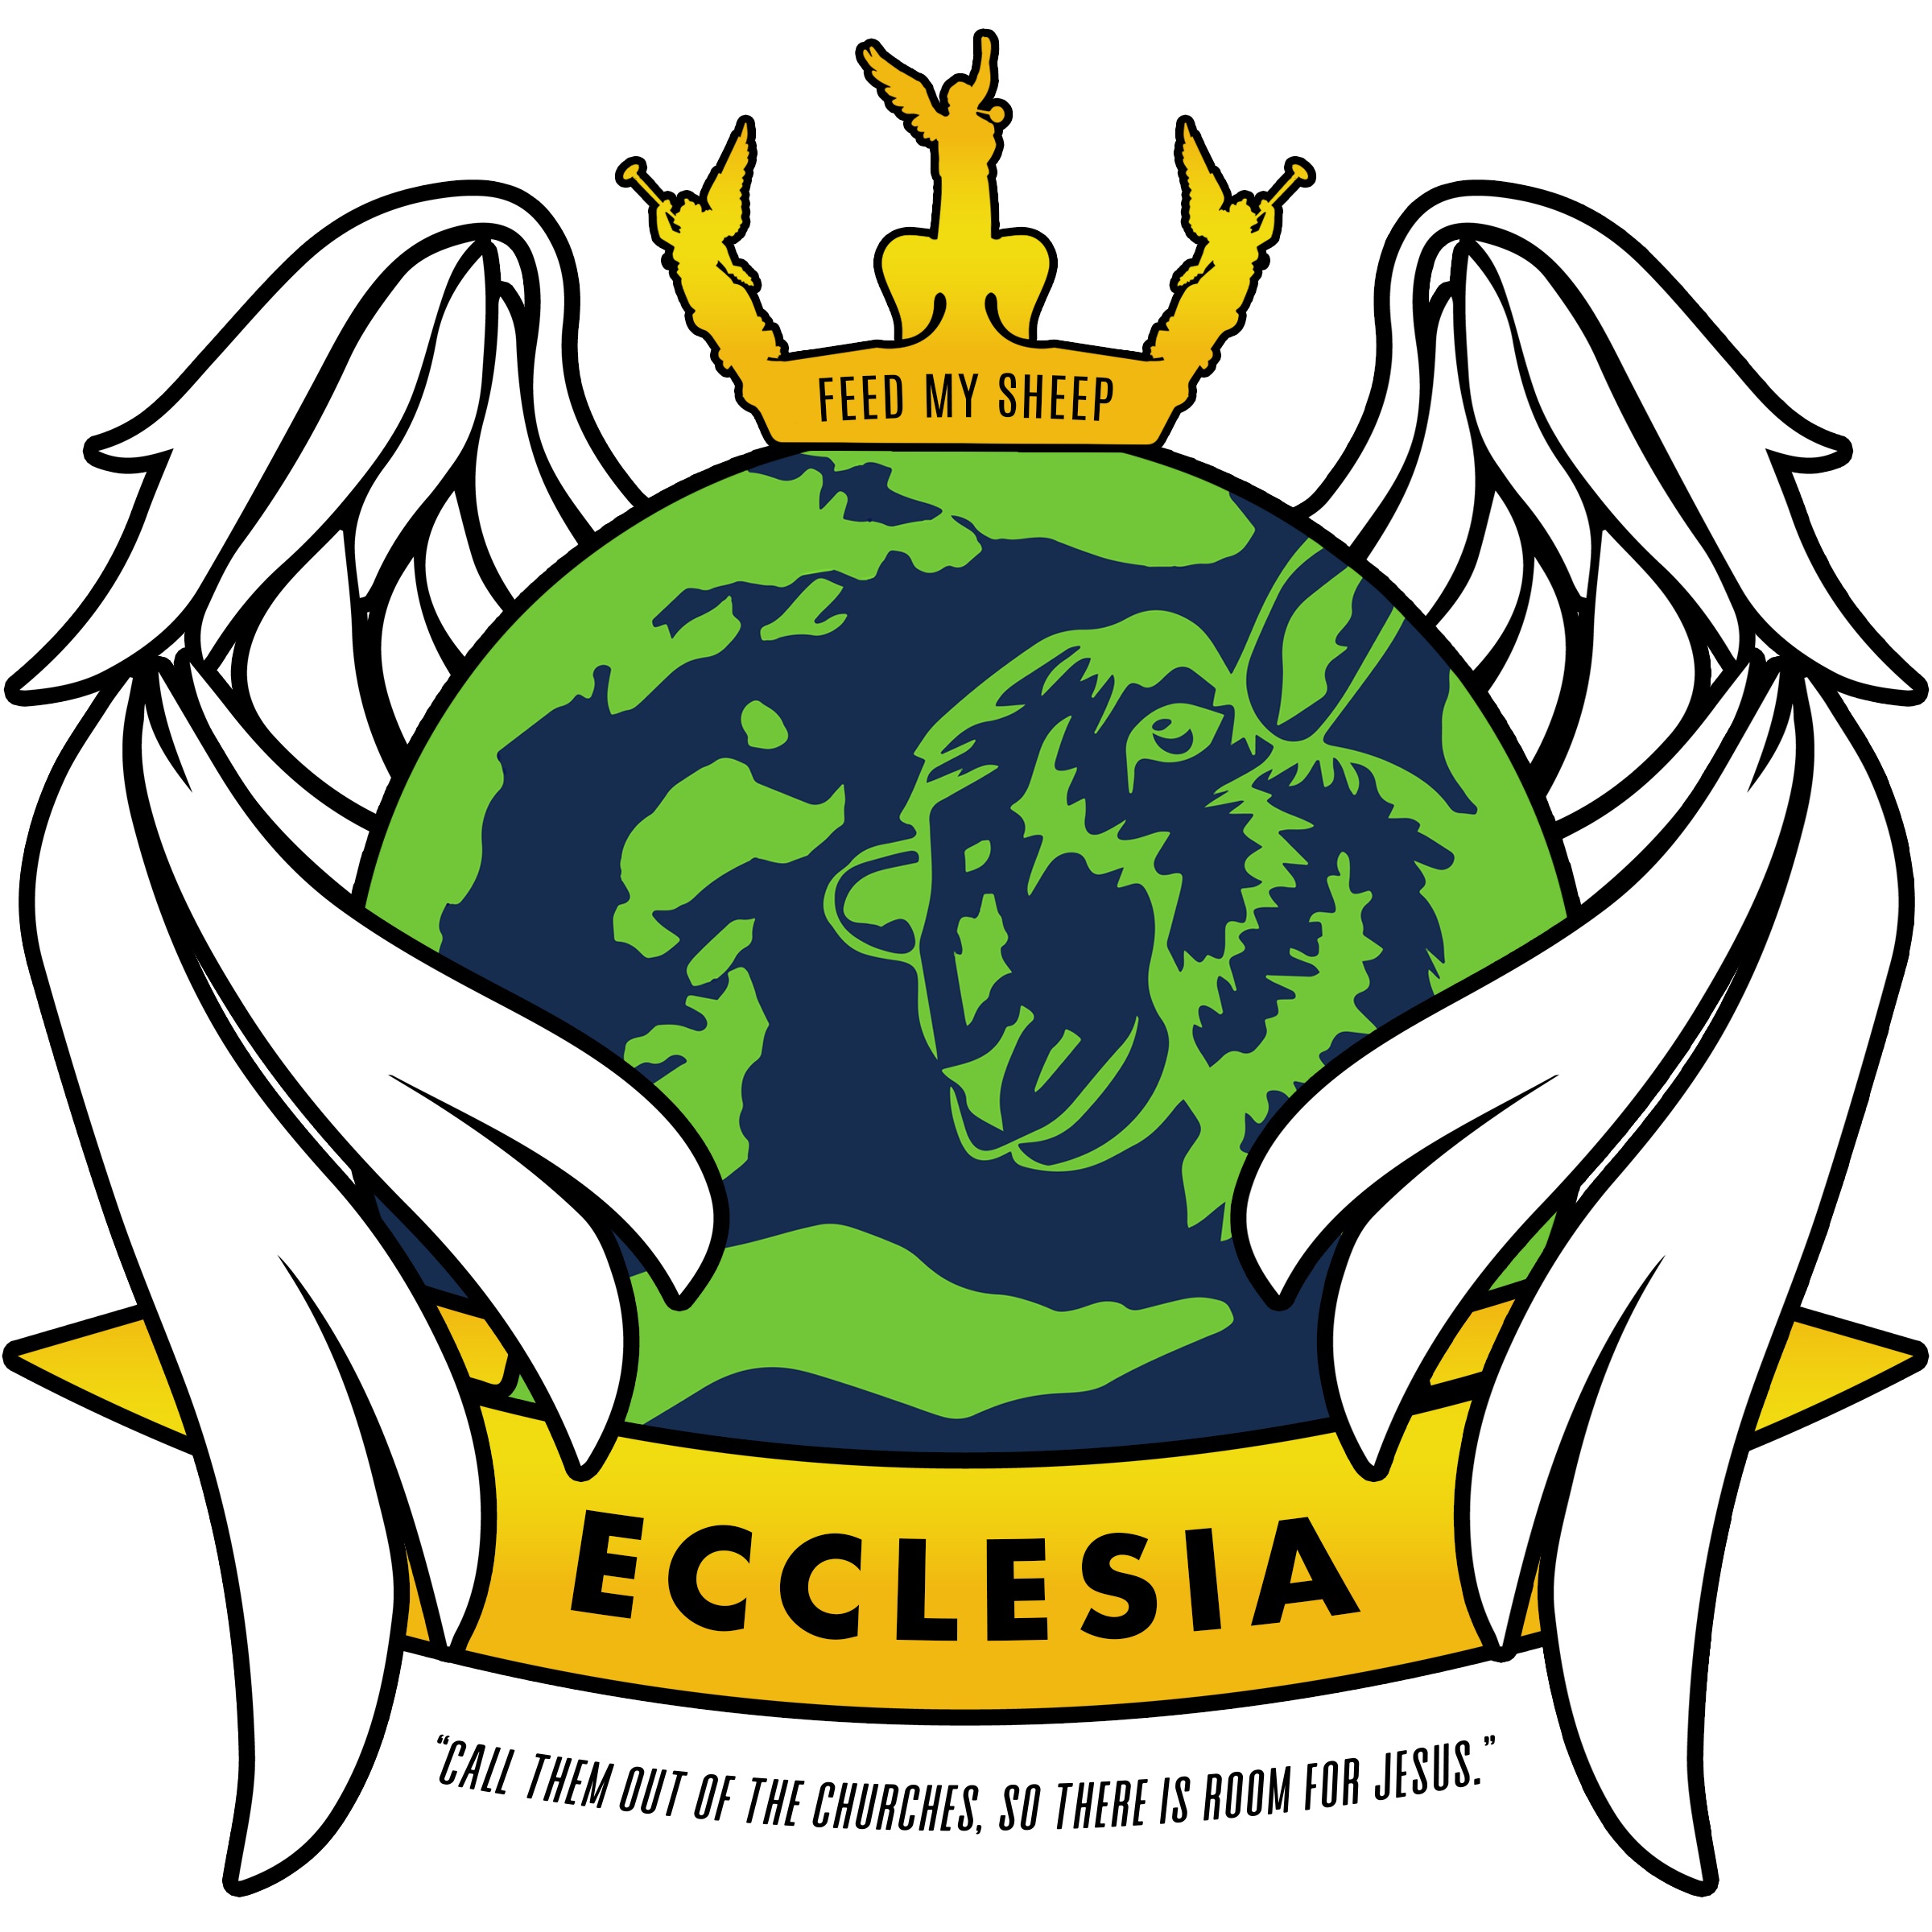 Feed My Sheep Ecclesia logo